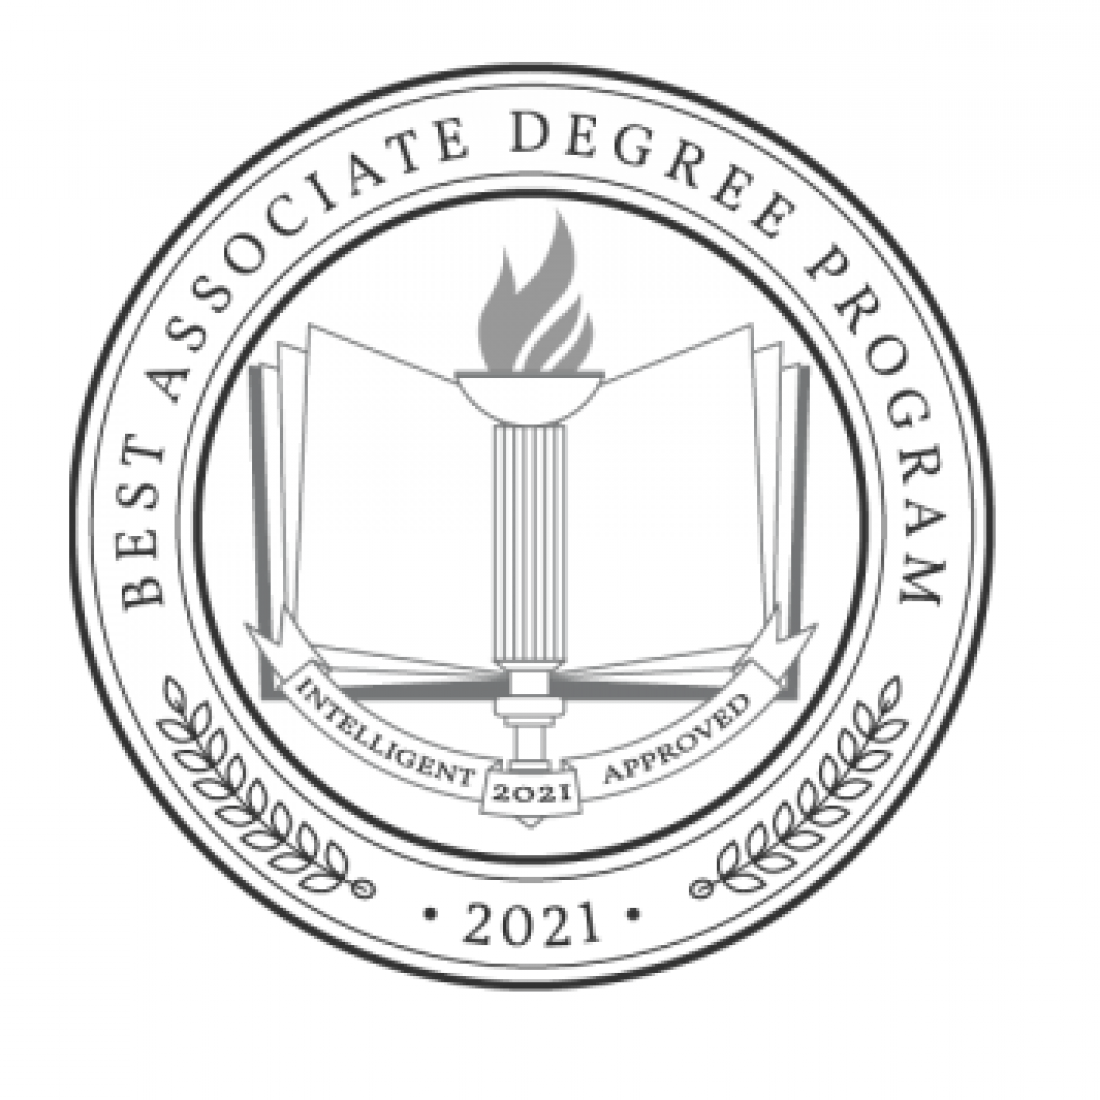 Best Associate Degree Program 2021